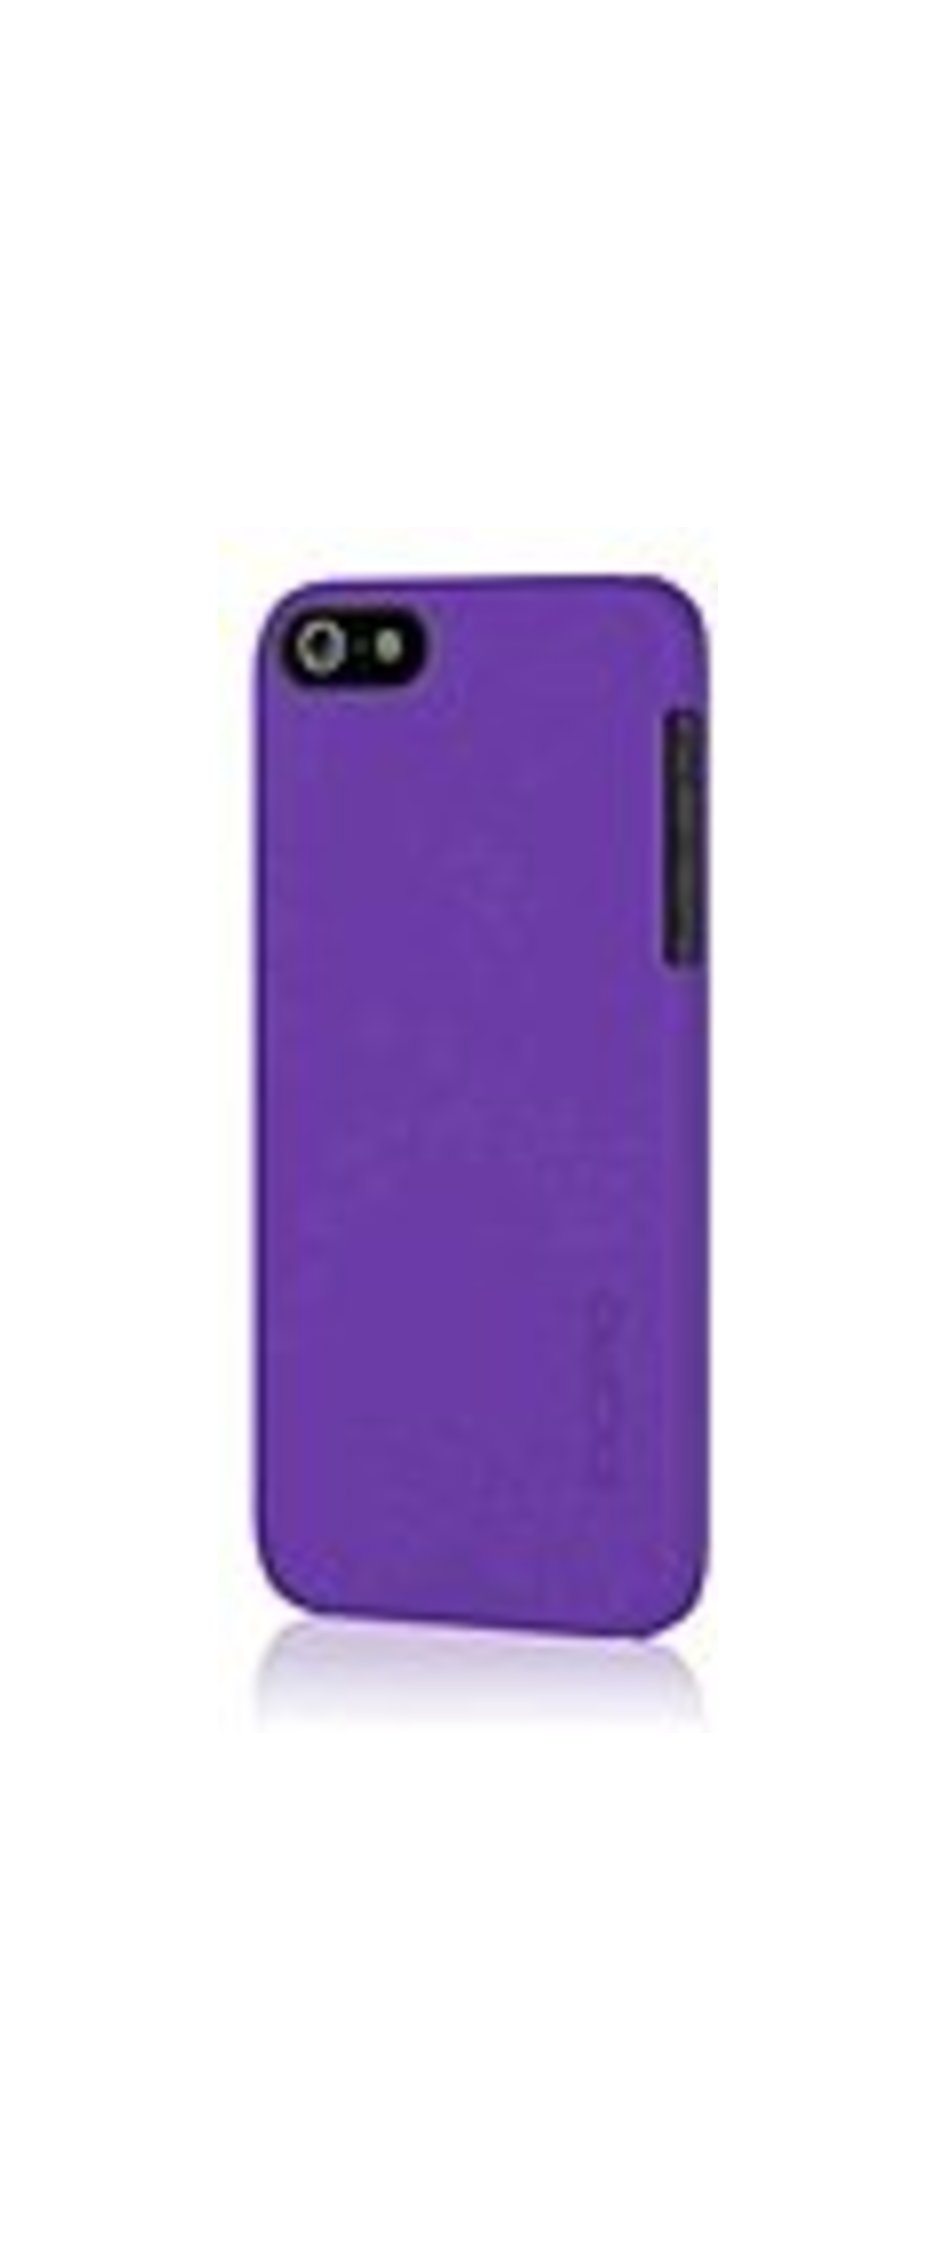 Incipio IPH-808 Feather Ultralight Hard Shell Snap-on Case - for iPhone 5/5S - Royal Purple - Translucent - Plextonium